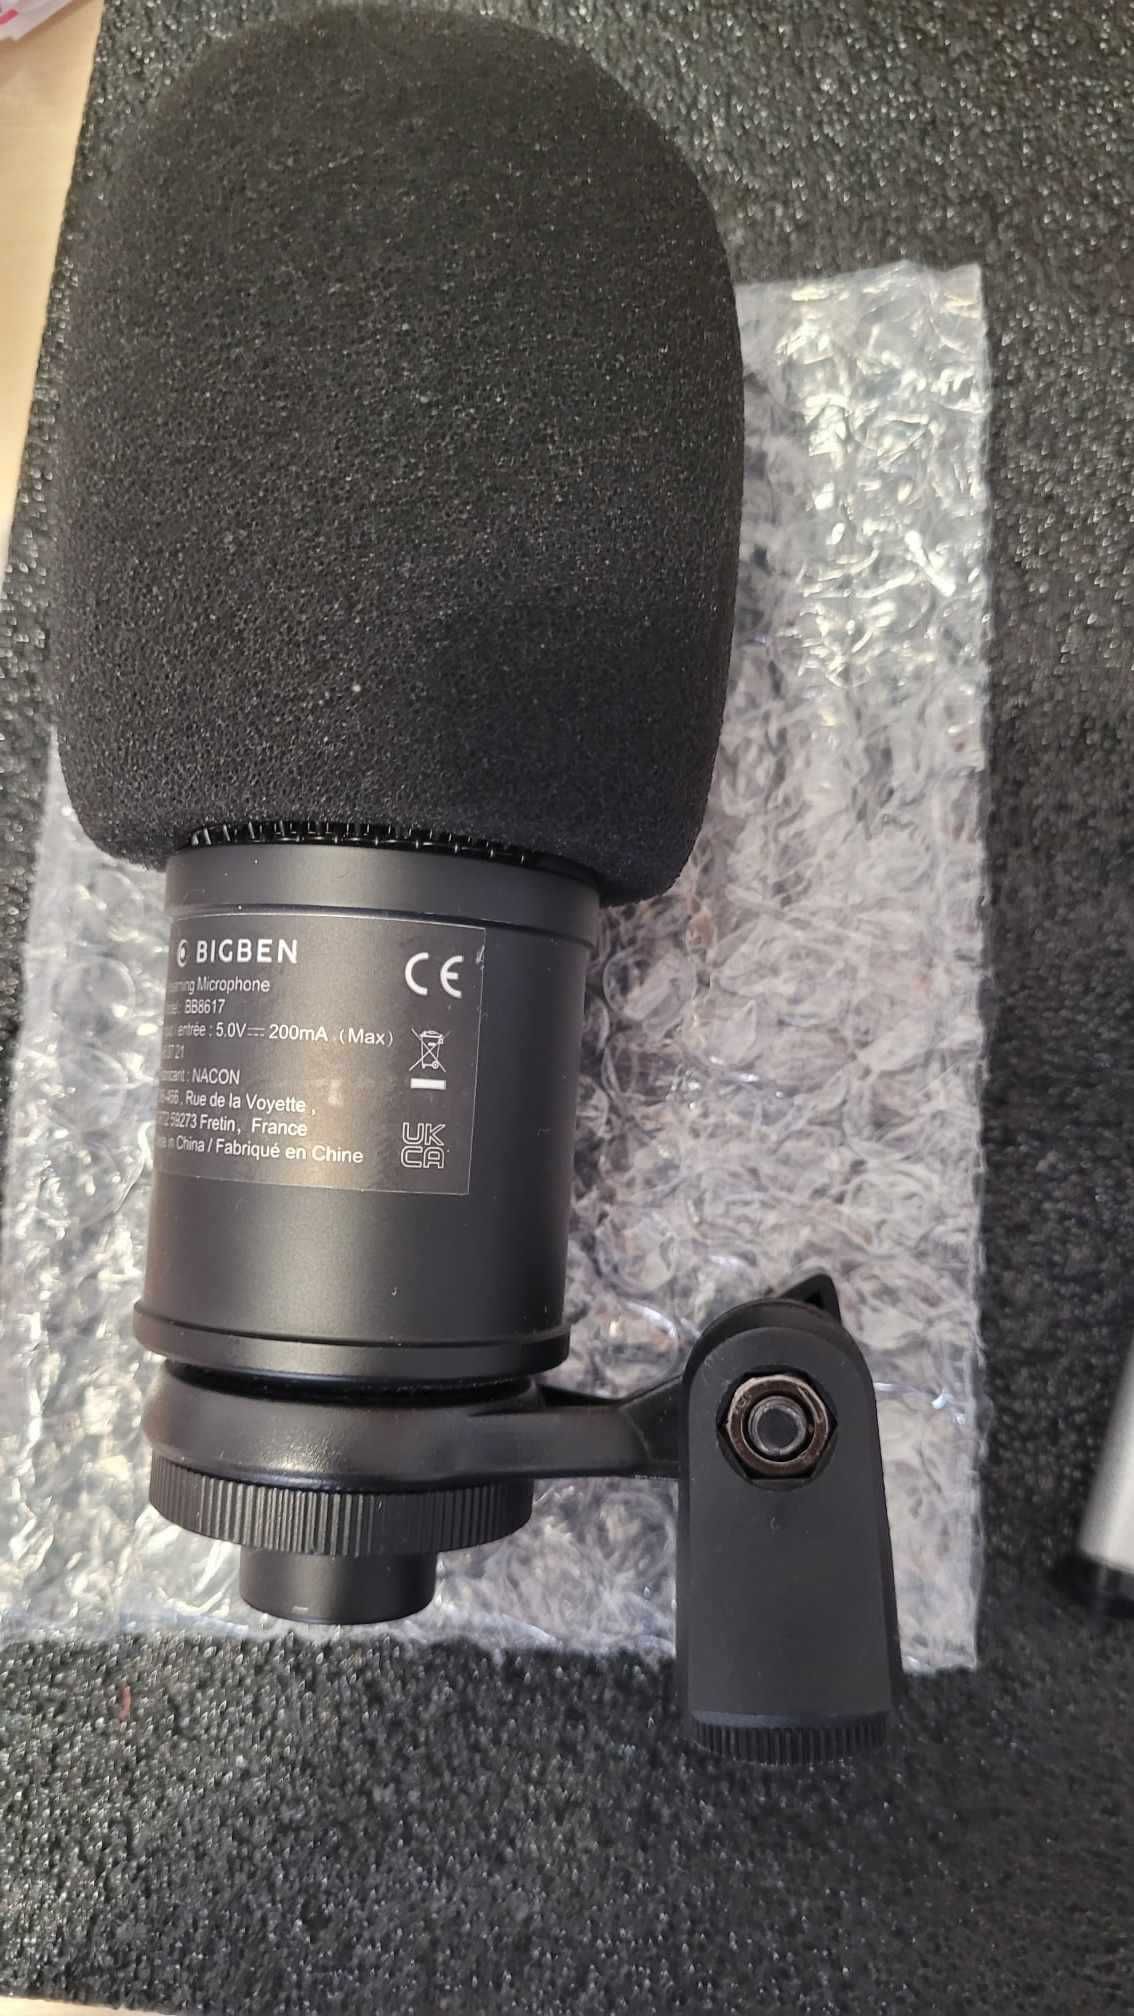 Nacon Bigben Studio Streaming Microphone Kit PS5-PC